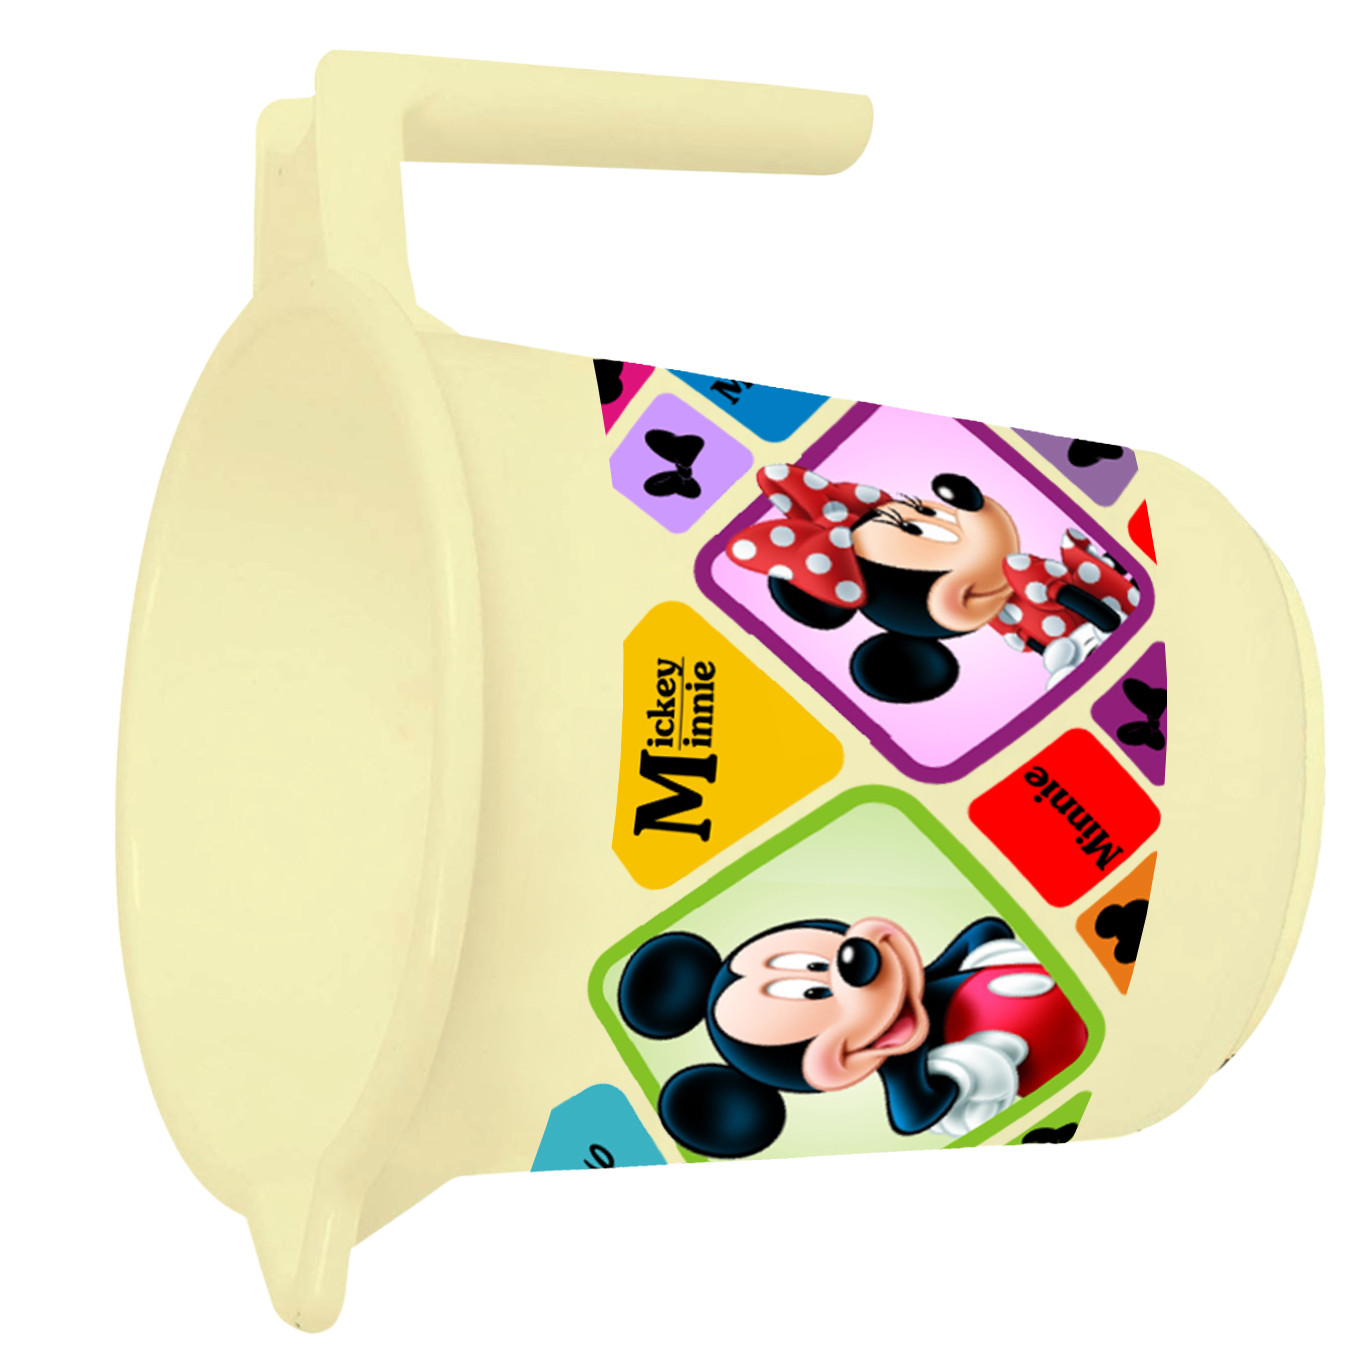 Kuber Industries Disney Mickey Minnie Print 4 Pieces Unbreakable Strong Plastic Bathroom Mug,500 ML (Cream & Blue) -HS_35_KUBMART17579